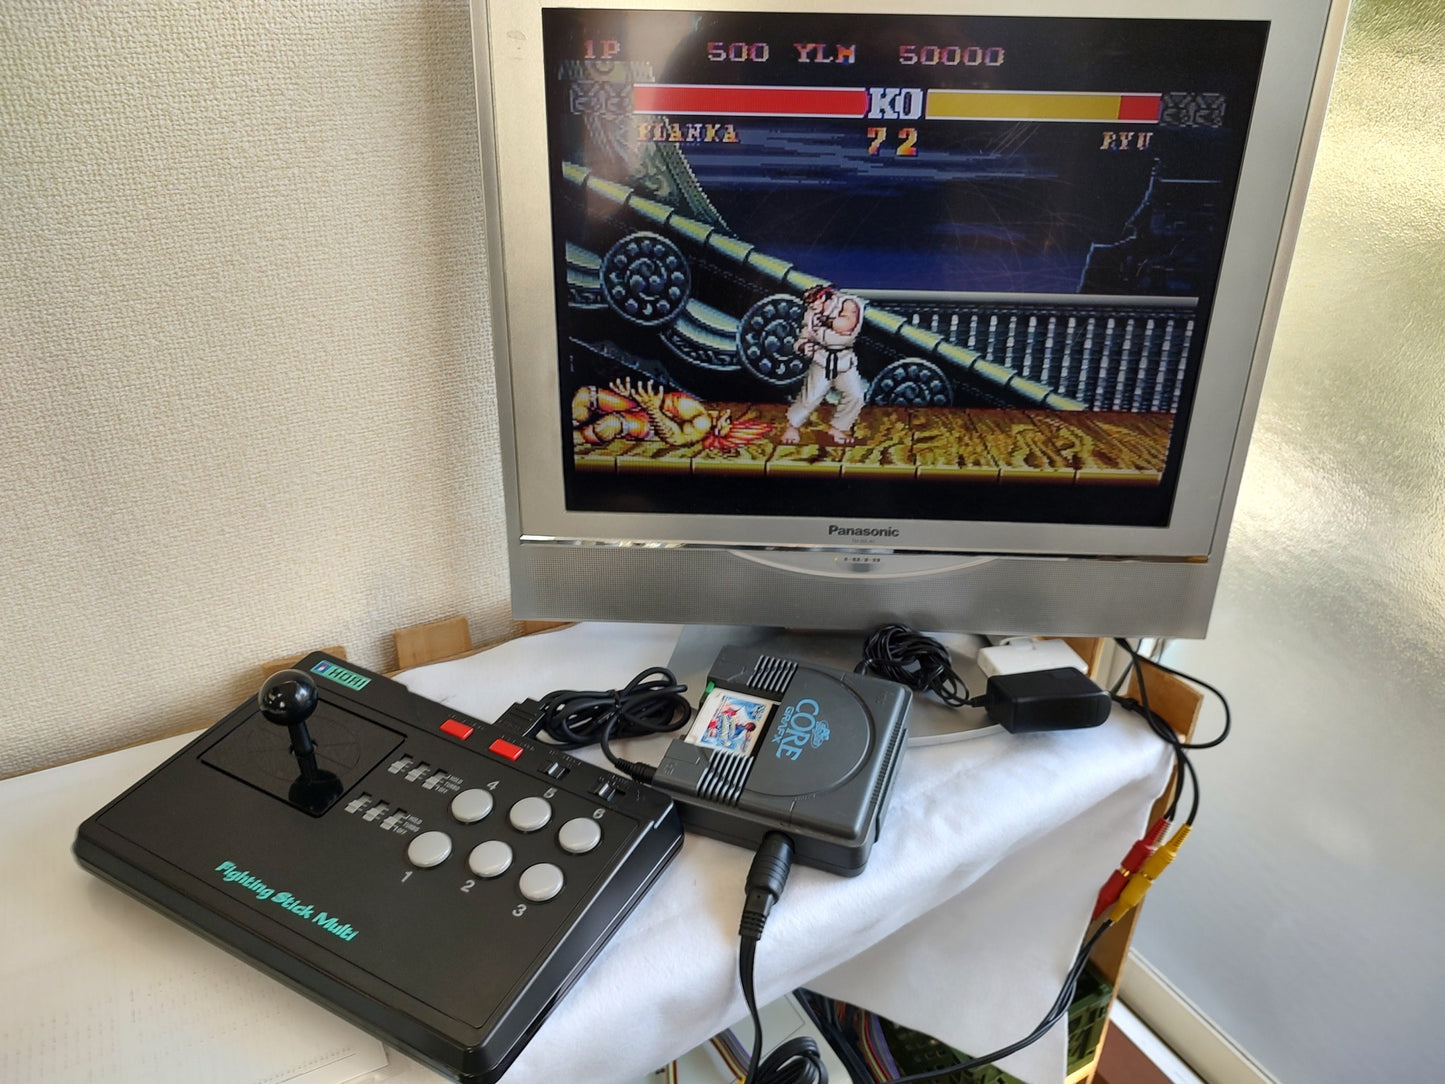 Hori Arcade Fighting Stick Multi for SNES, PC Engine, Megadrive Boxed set-f0614-